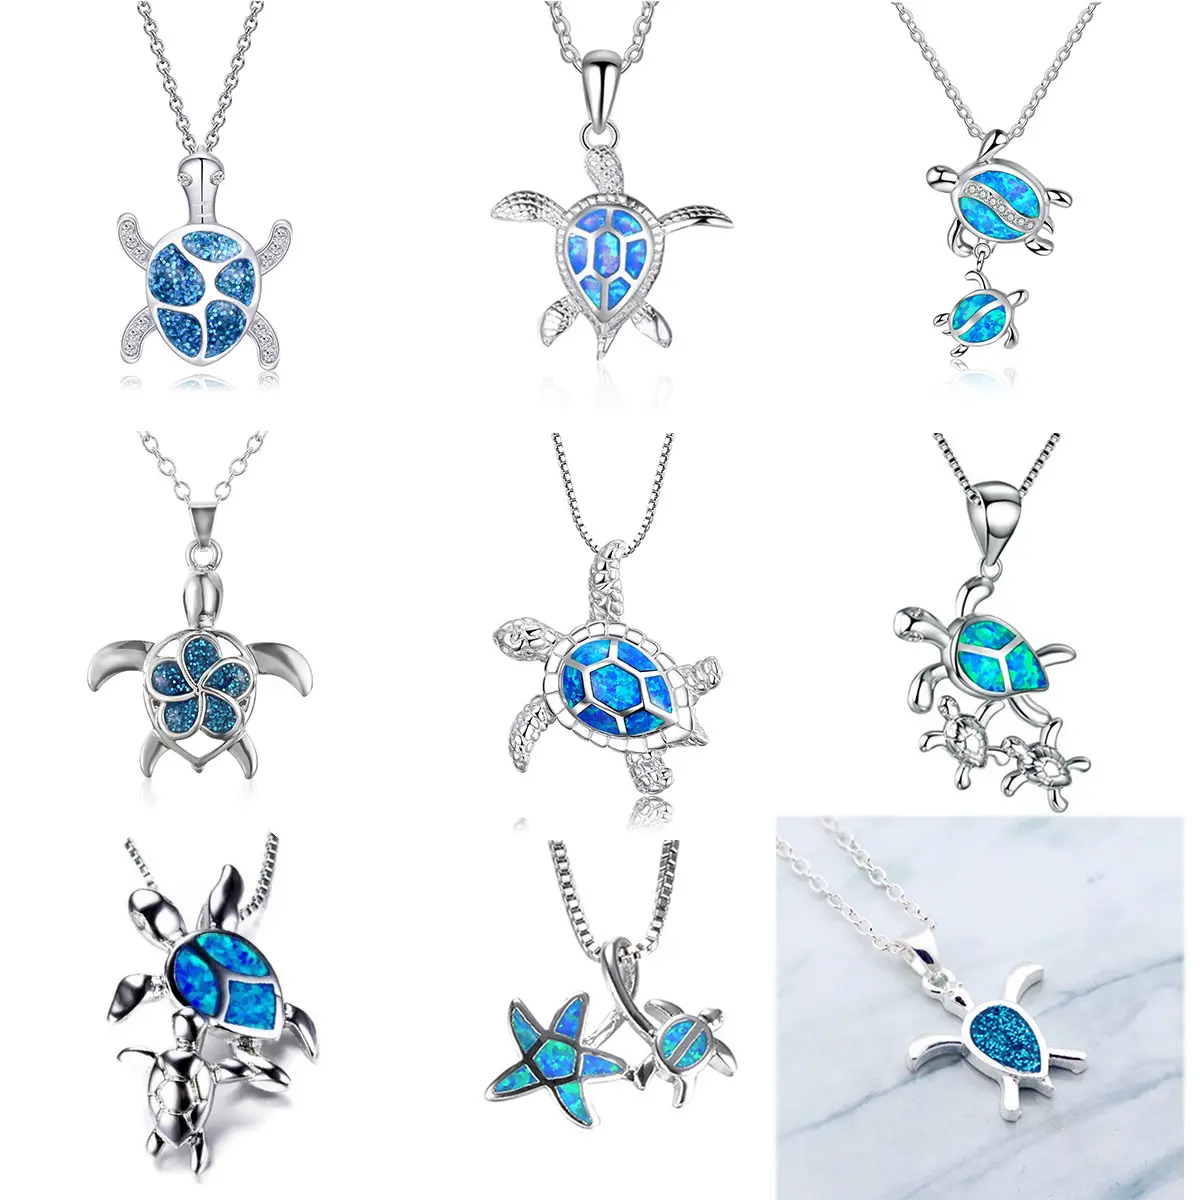 Fashion Silver Filled Blue Opal Sea Turtle Pendant Necklace Women Animal Beach Jewelry Accessory